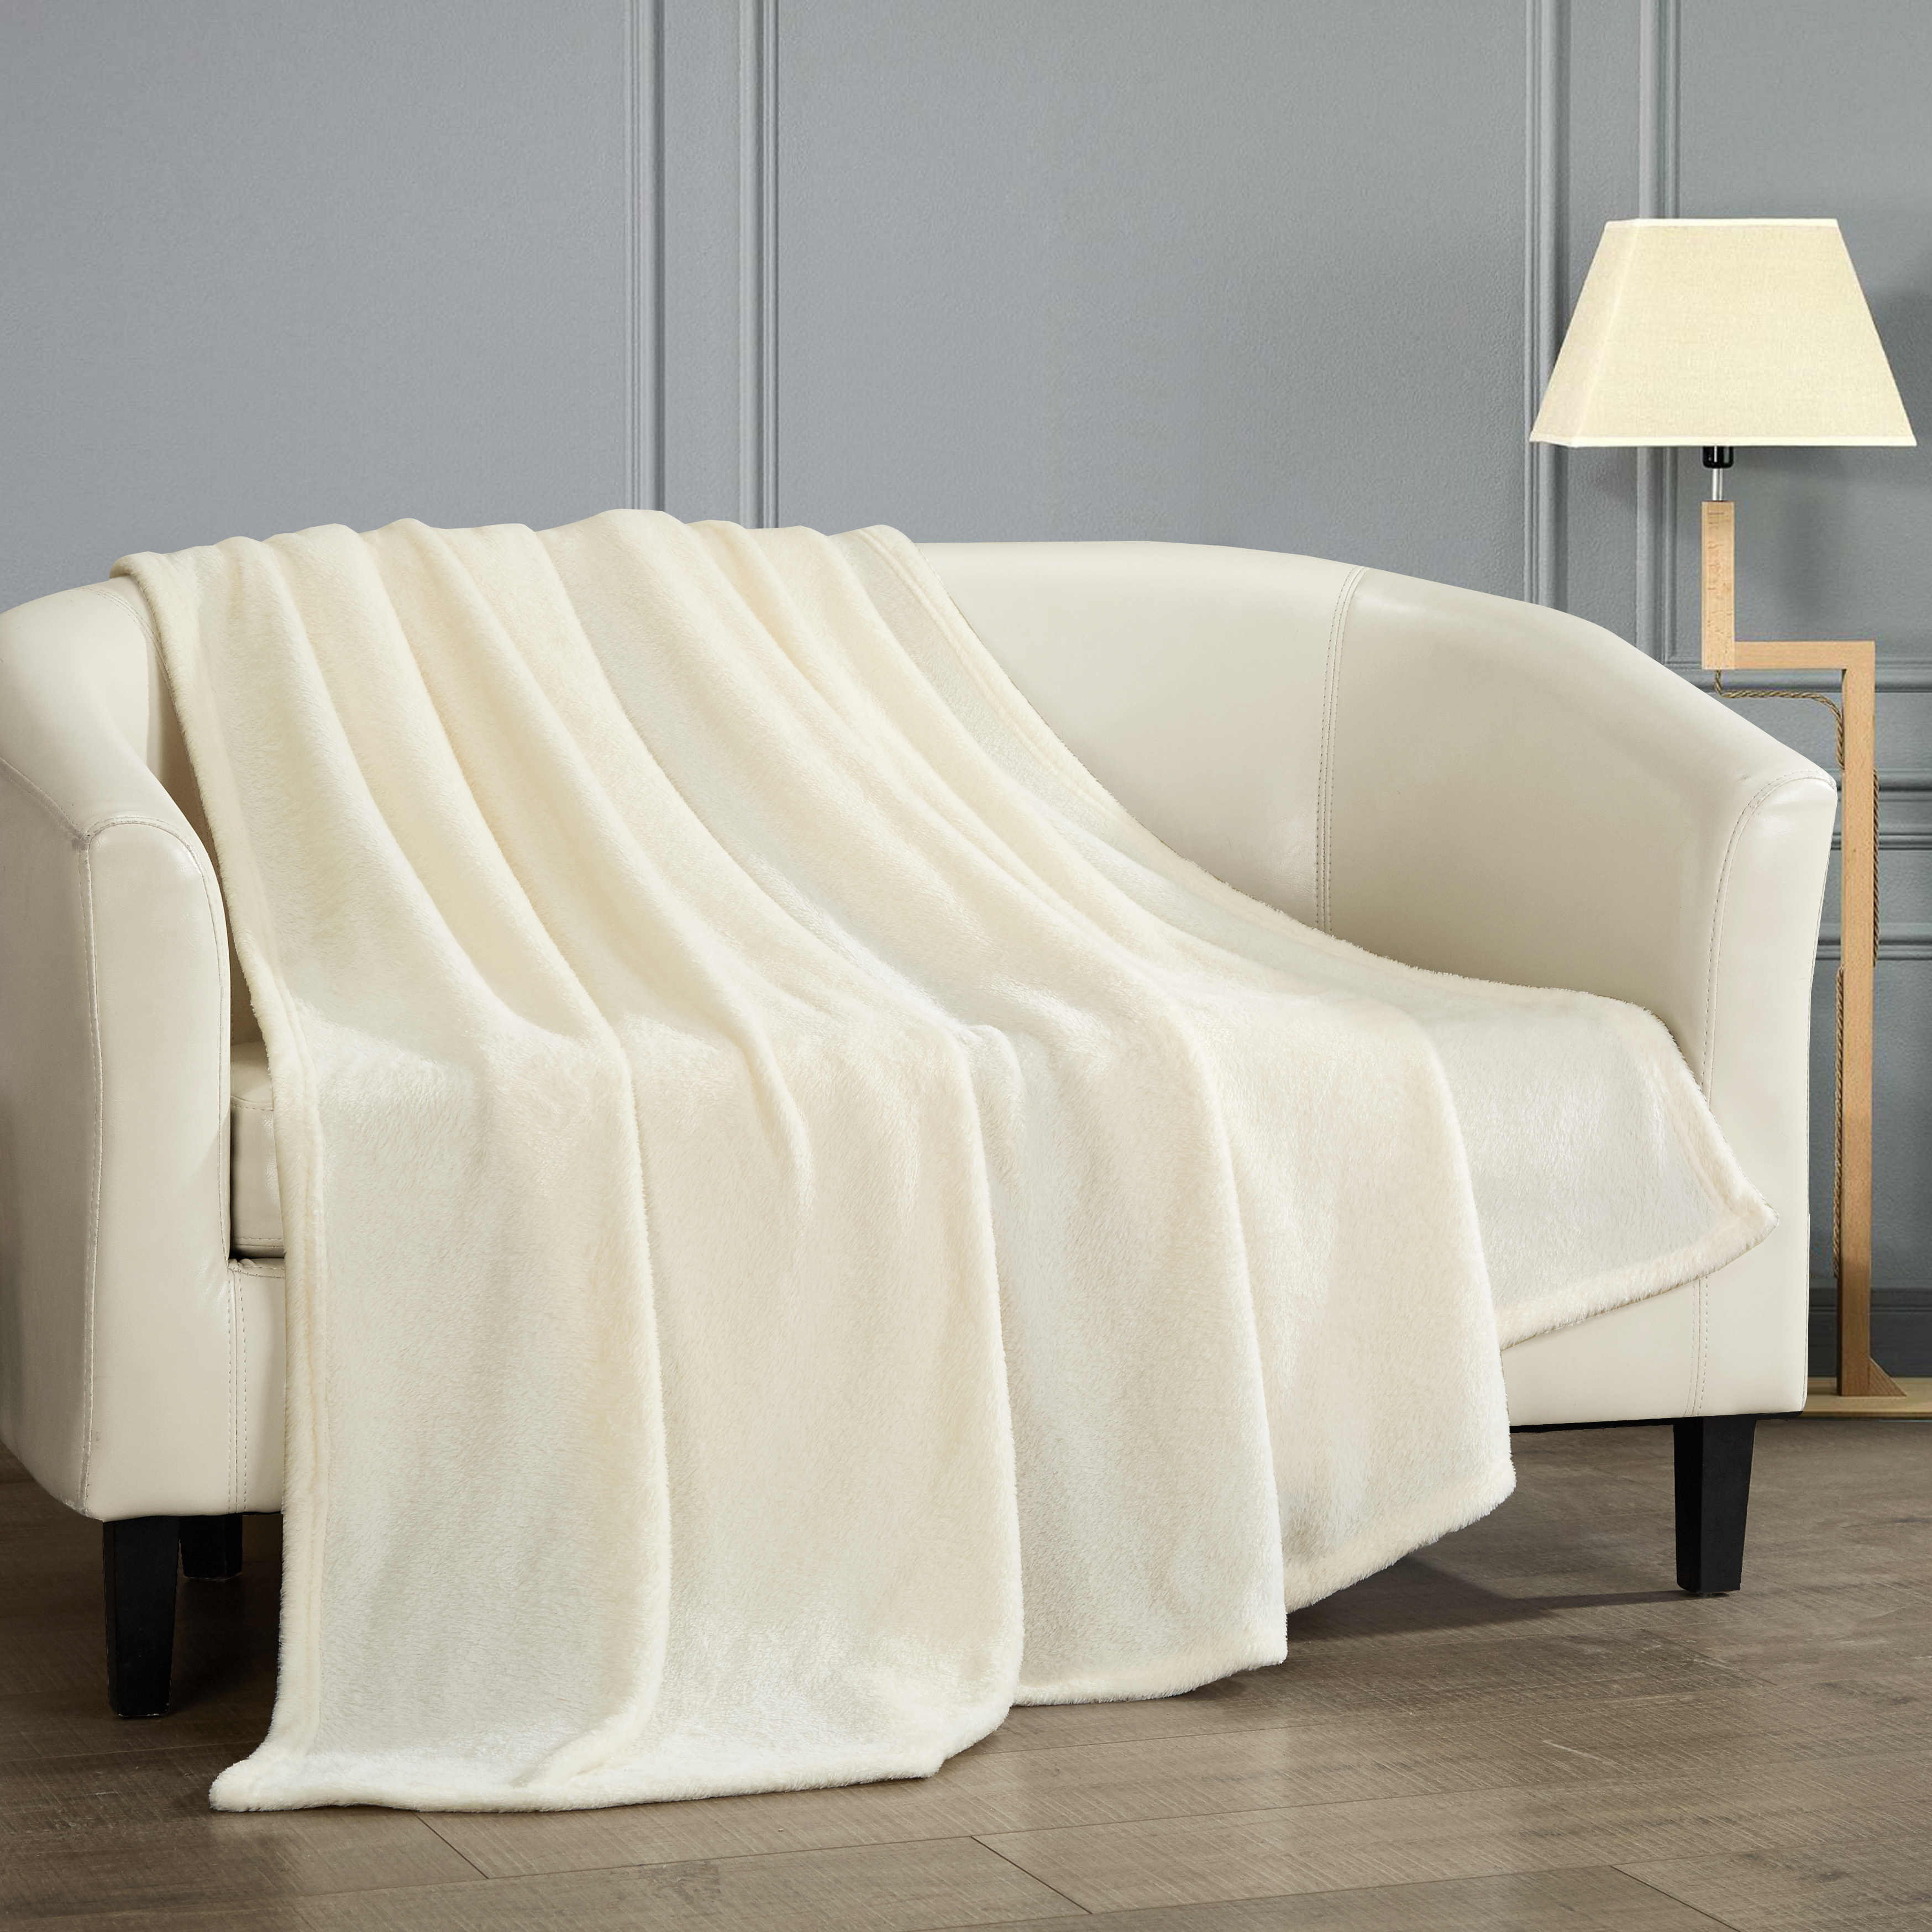 Kaeden Throw Blanket Cozy Super Soft Ultra Plush Micro Mink Fleece Decorative Design - Plum